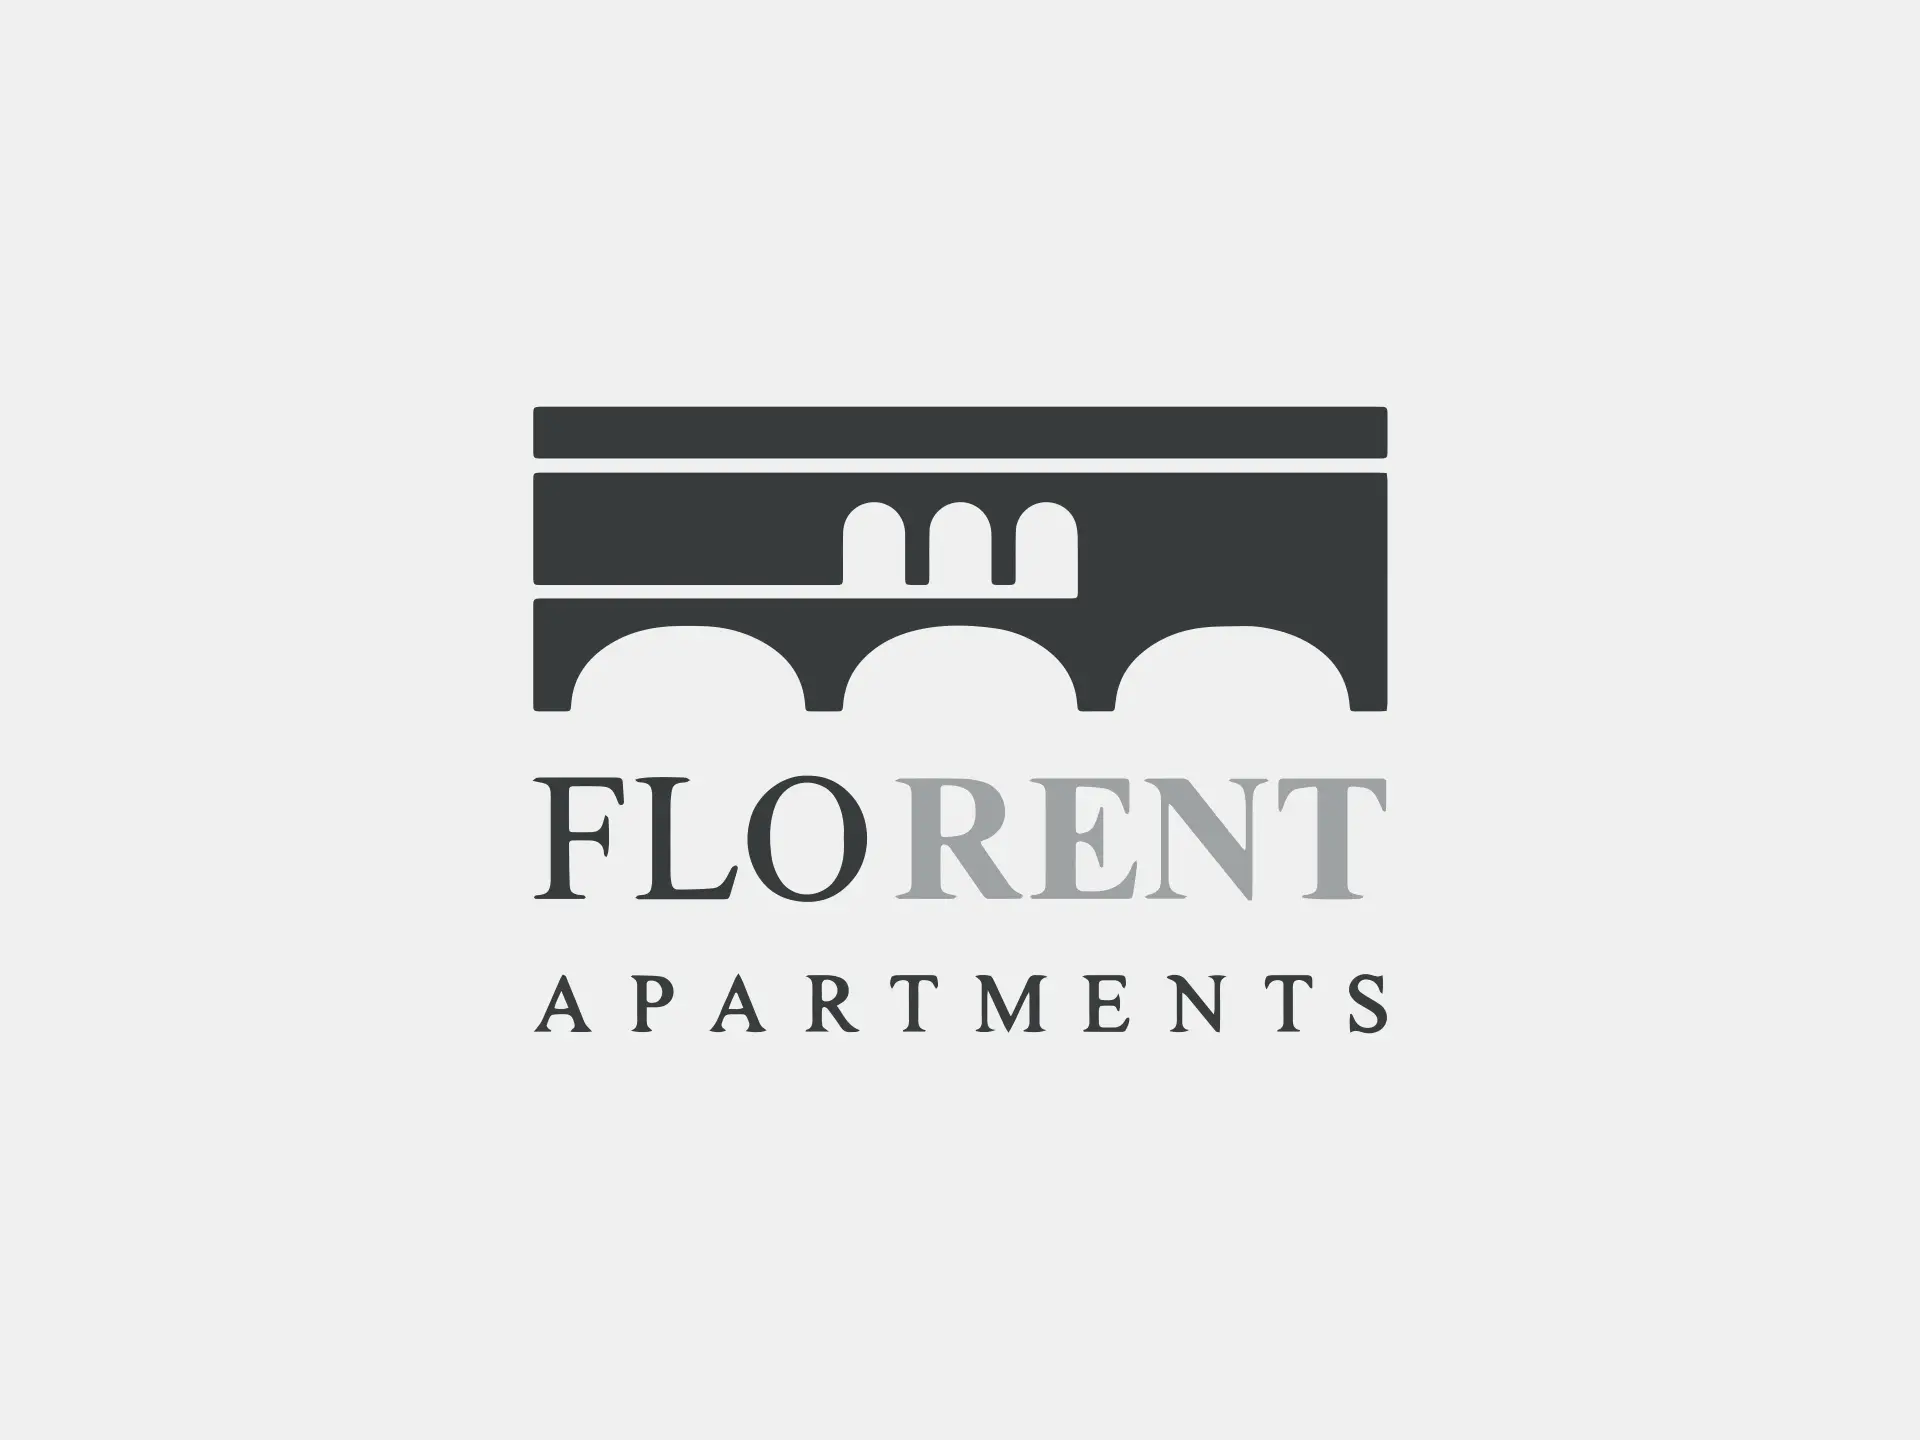 un-real-zampolini-biffi-gentili_florent-apartments-comunicazione-aziendale_2-bis